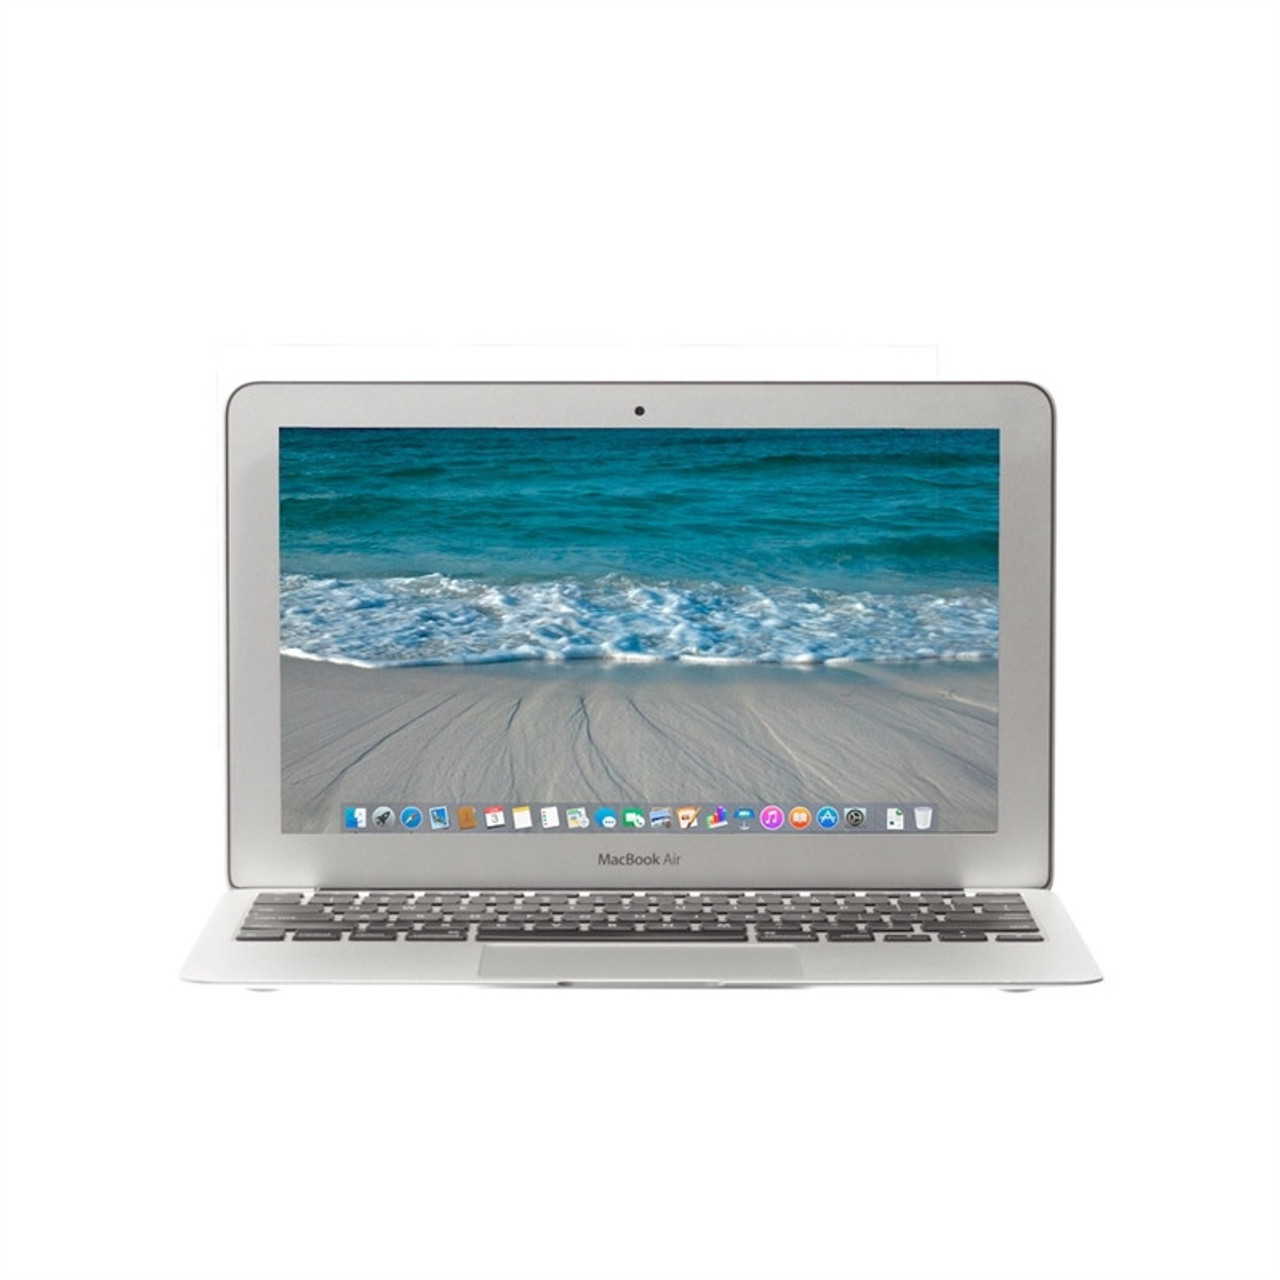 Fair Condition*: Apple MacBook Air 11-inch 1.3GHz Core i5 (Mid 2013)  MD711LL/A 4